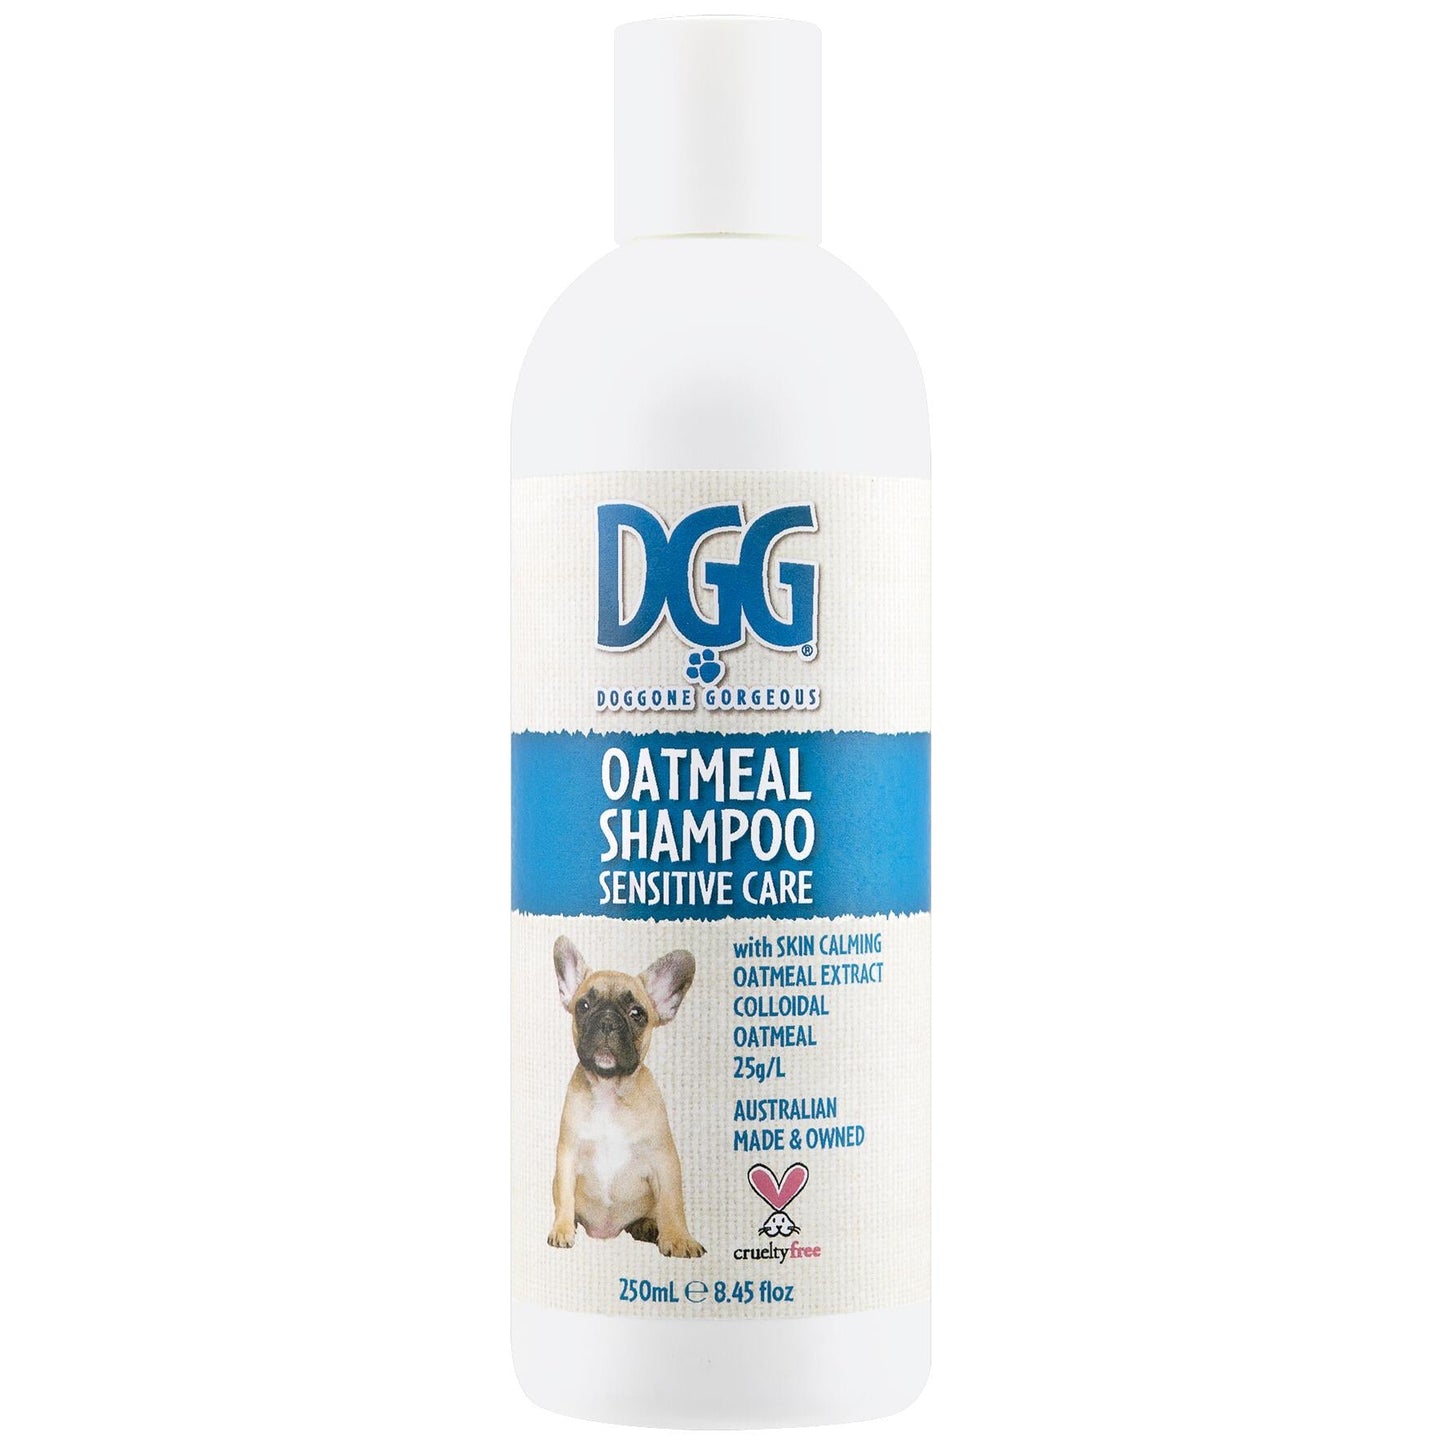 DGG Oatmeal Shampoo 250ml